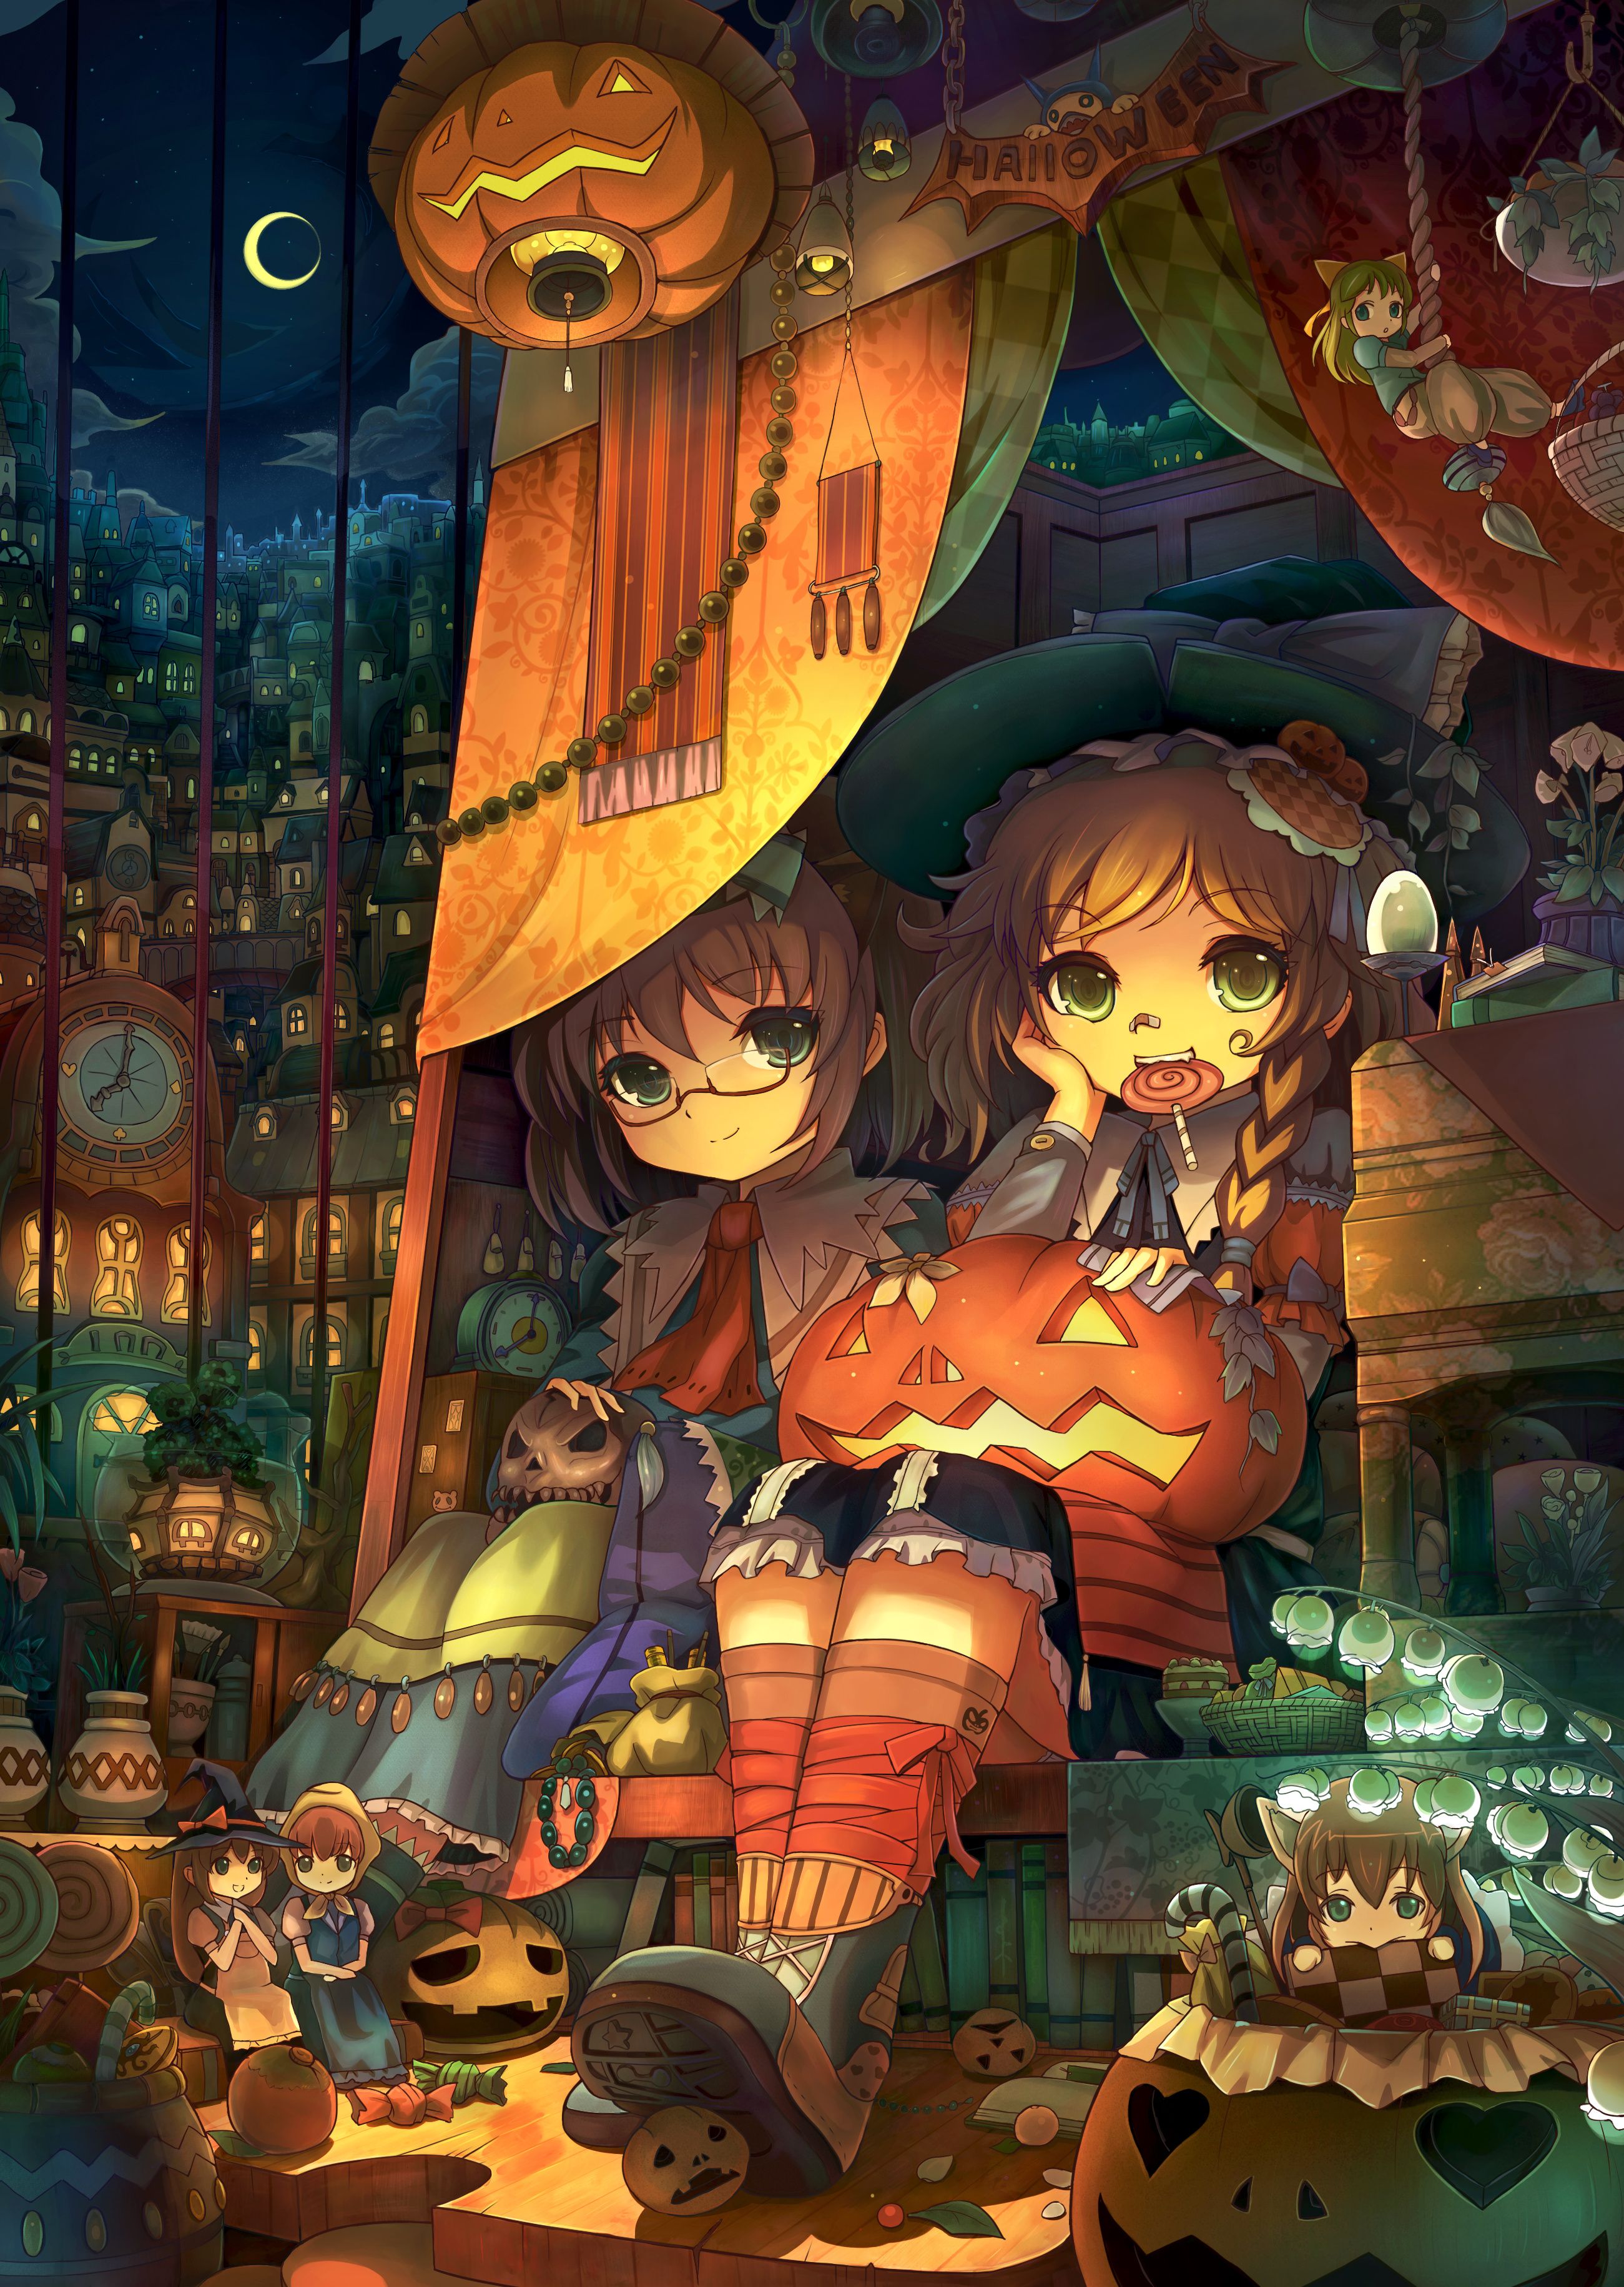 Cute anime halloween wallpaper. •αят&αɴιмαтιoɴ•. Anime